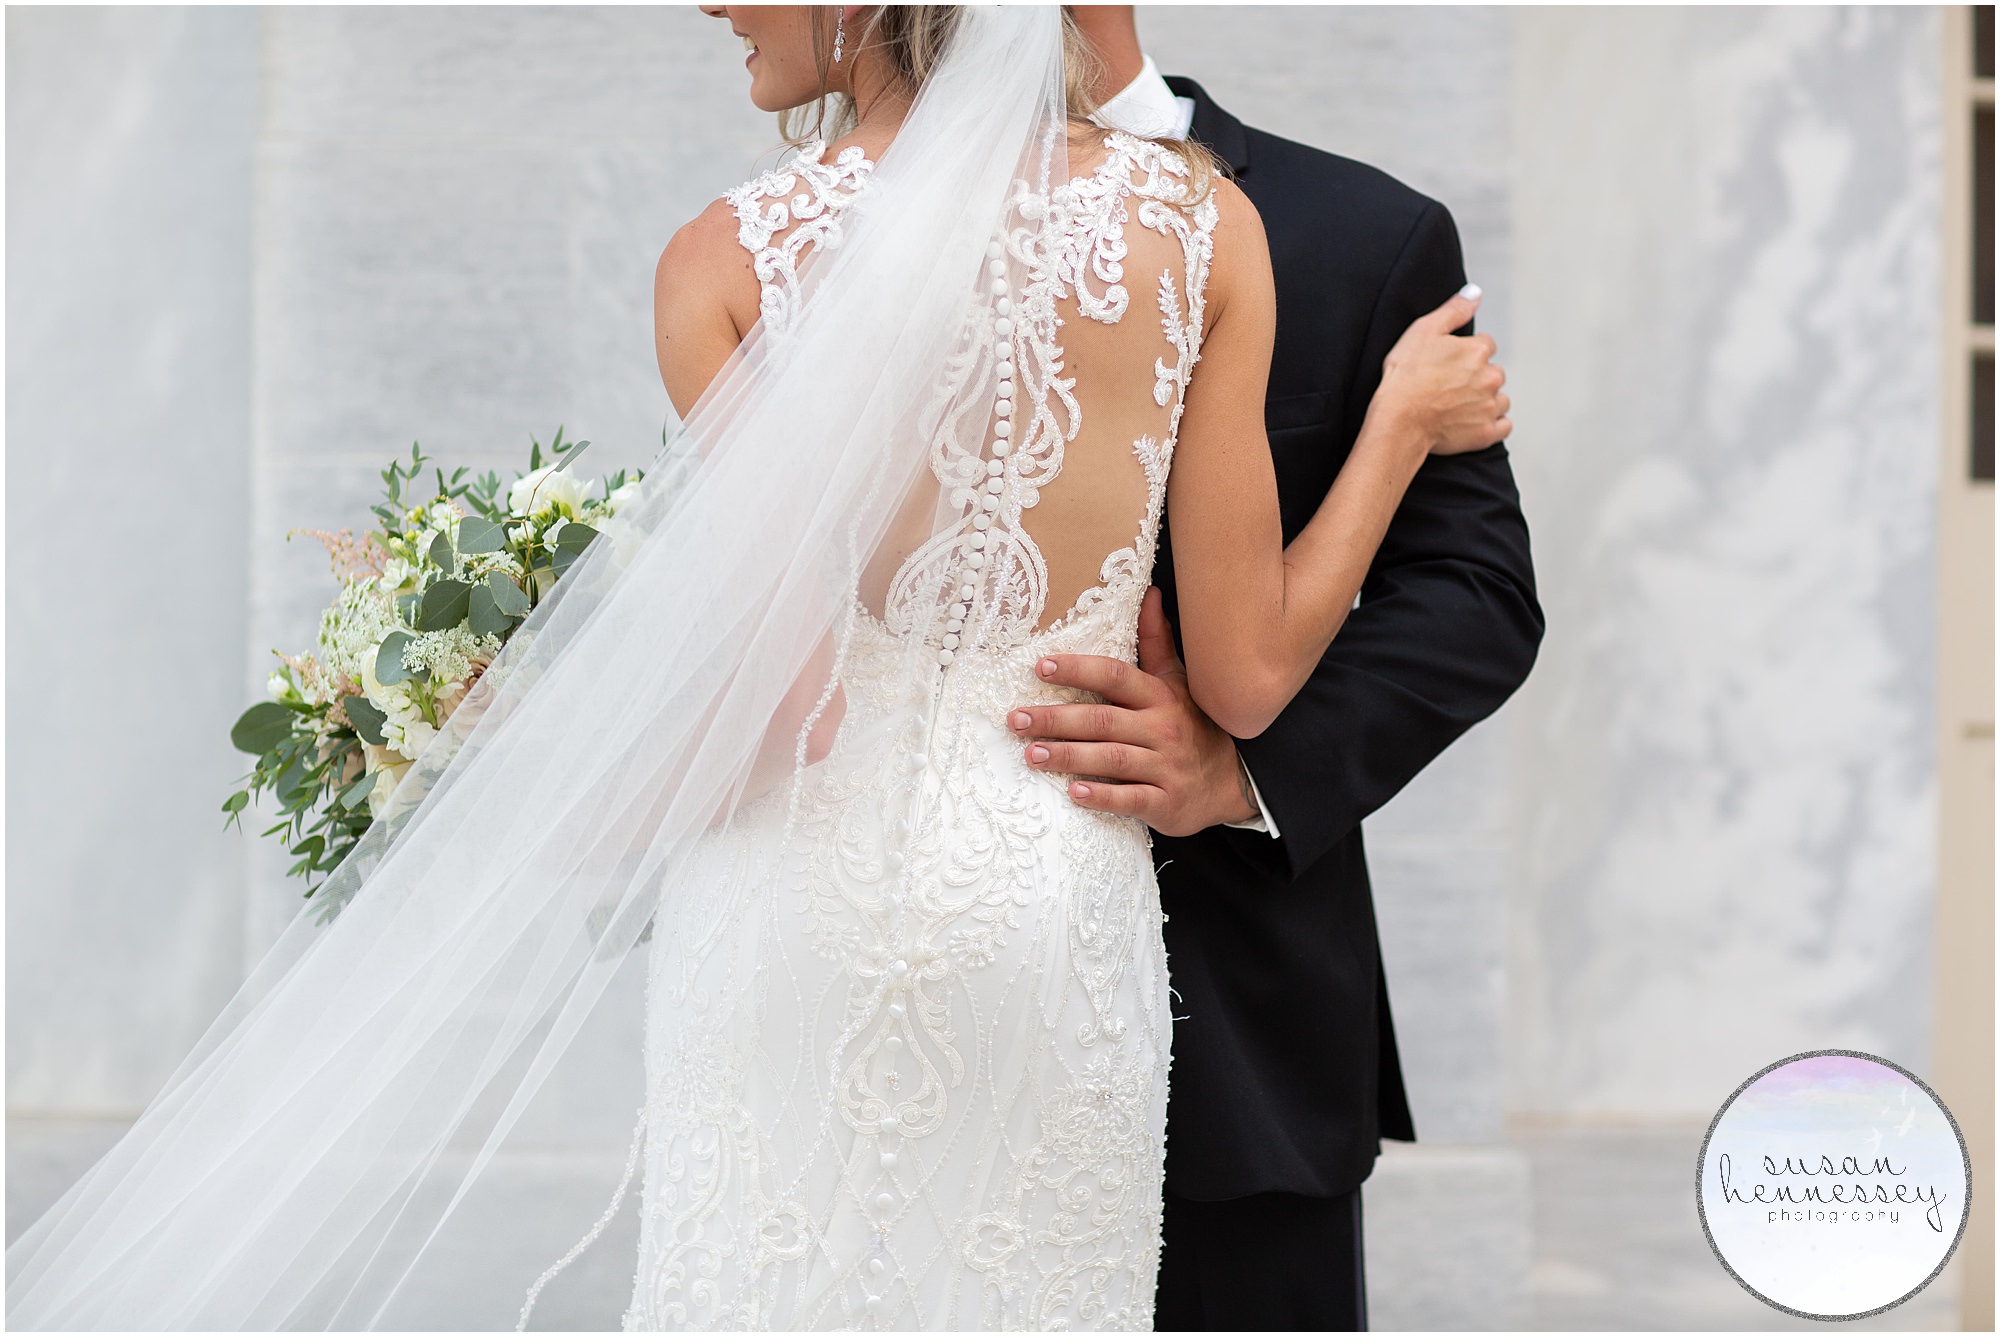 Details of the back of bride's dress.